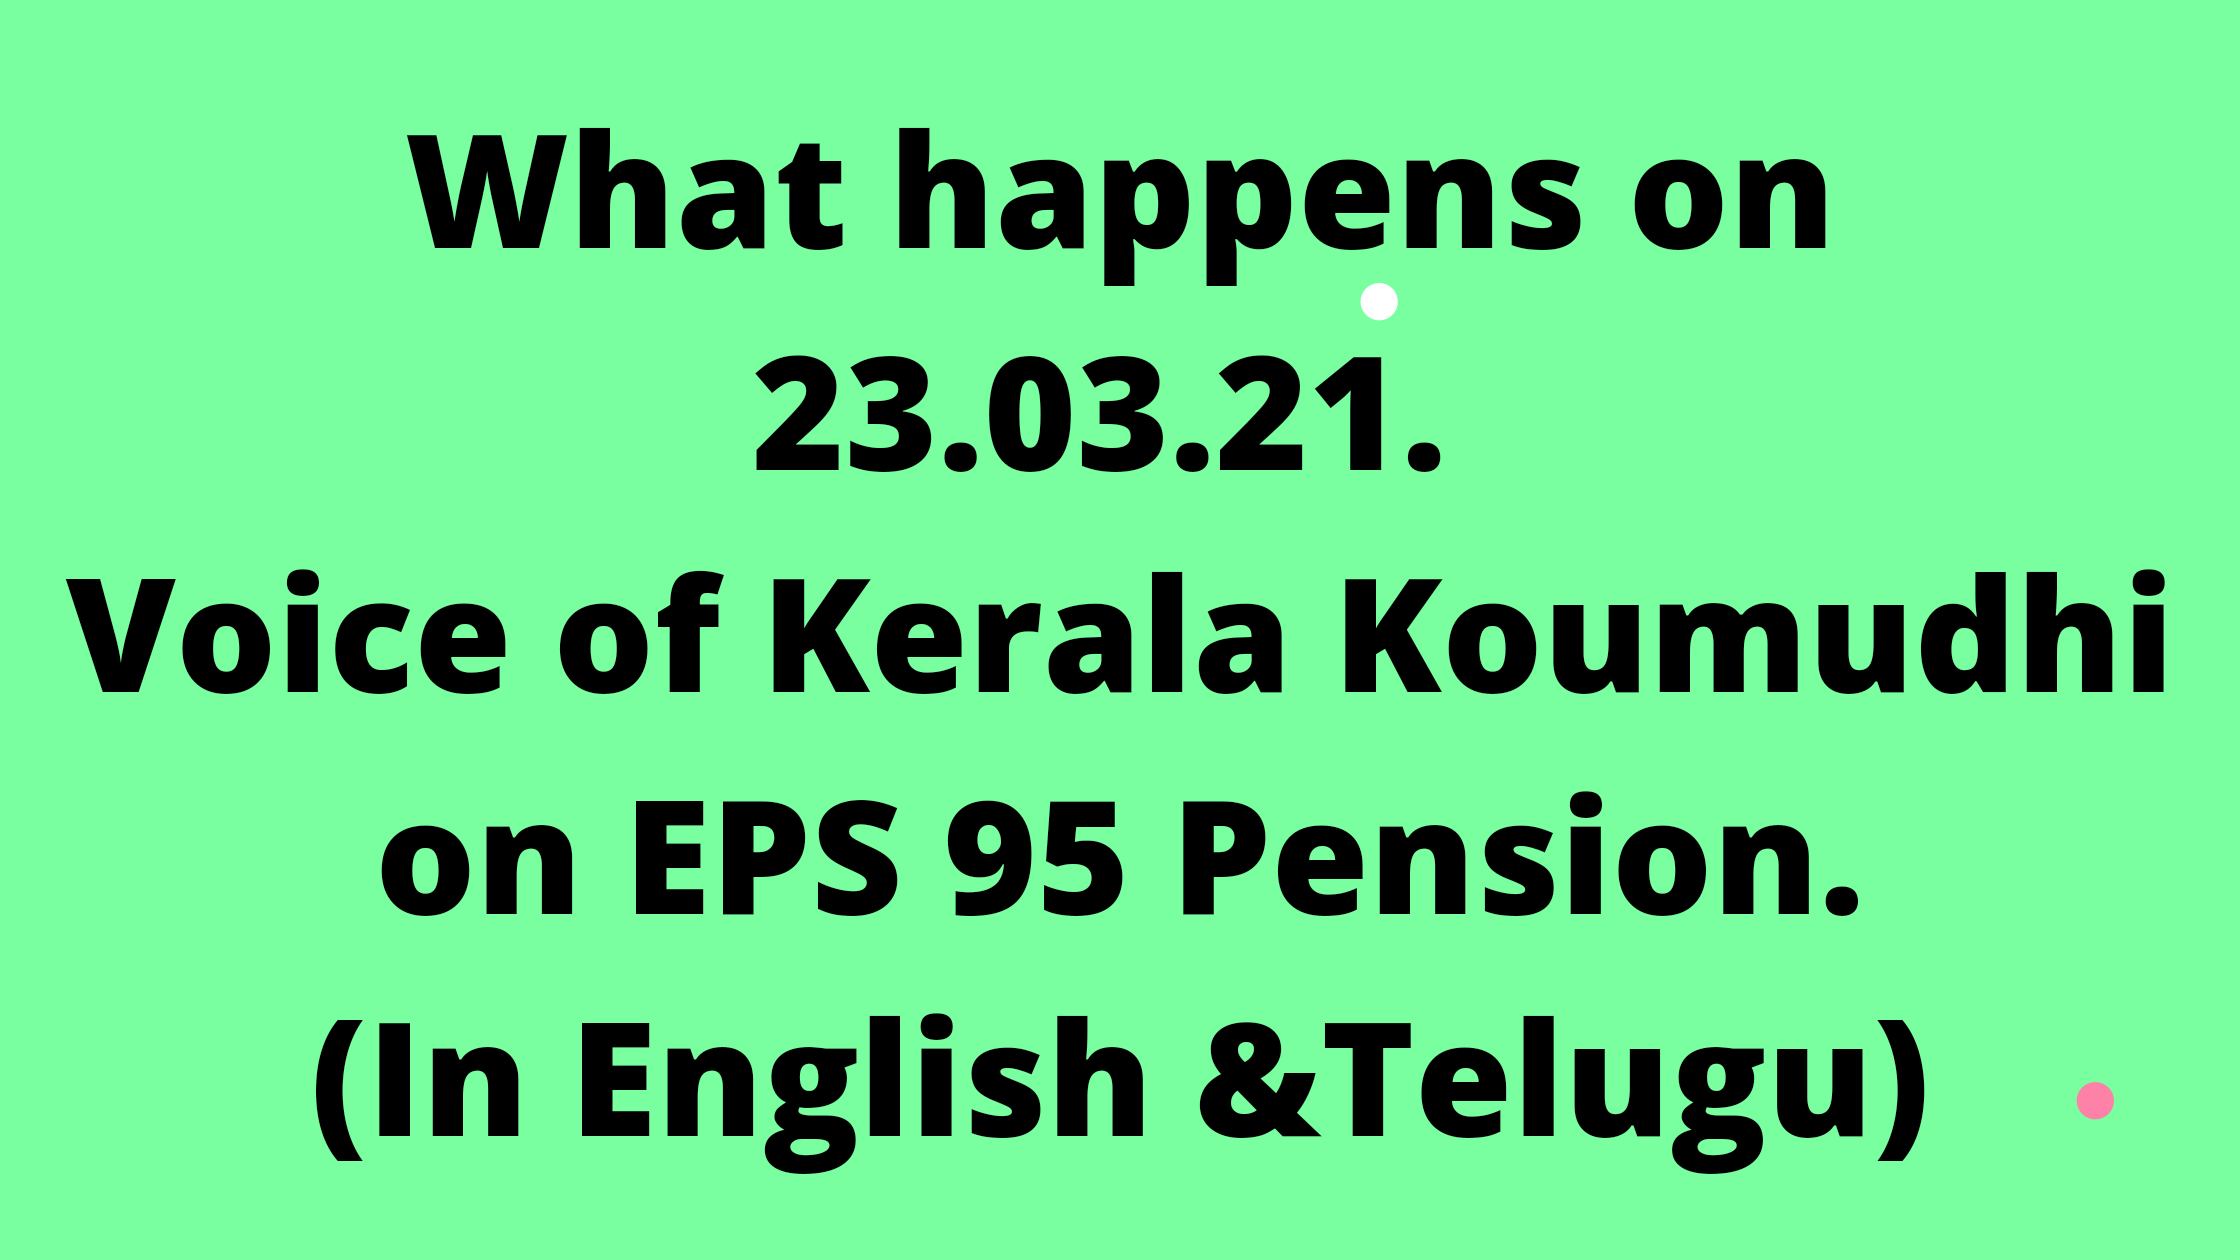 What happens on 23.03.21. Voice of Kerala Koumudhi on EPS 95 Pension.